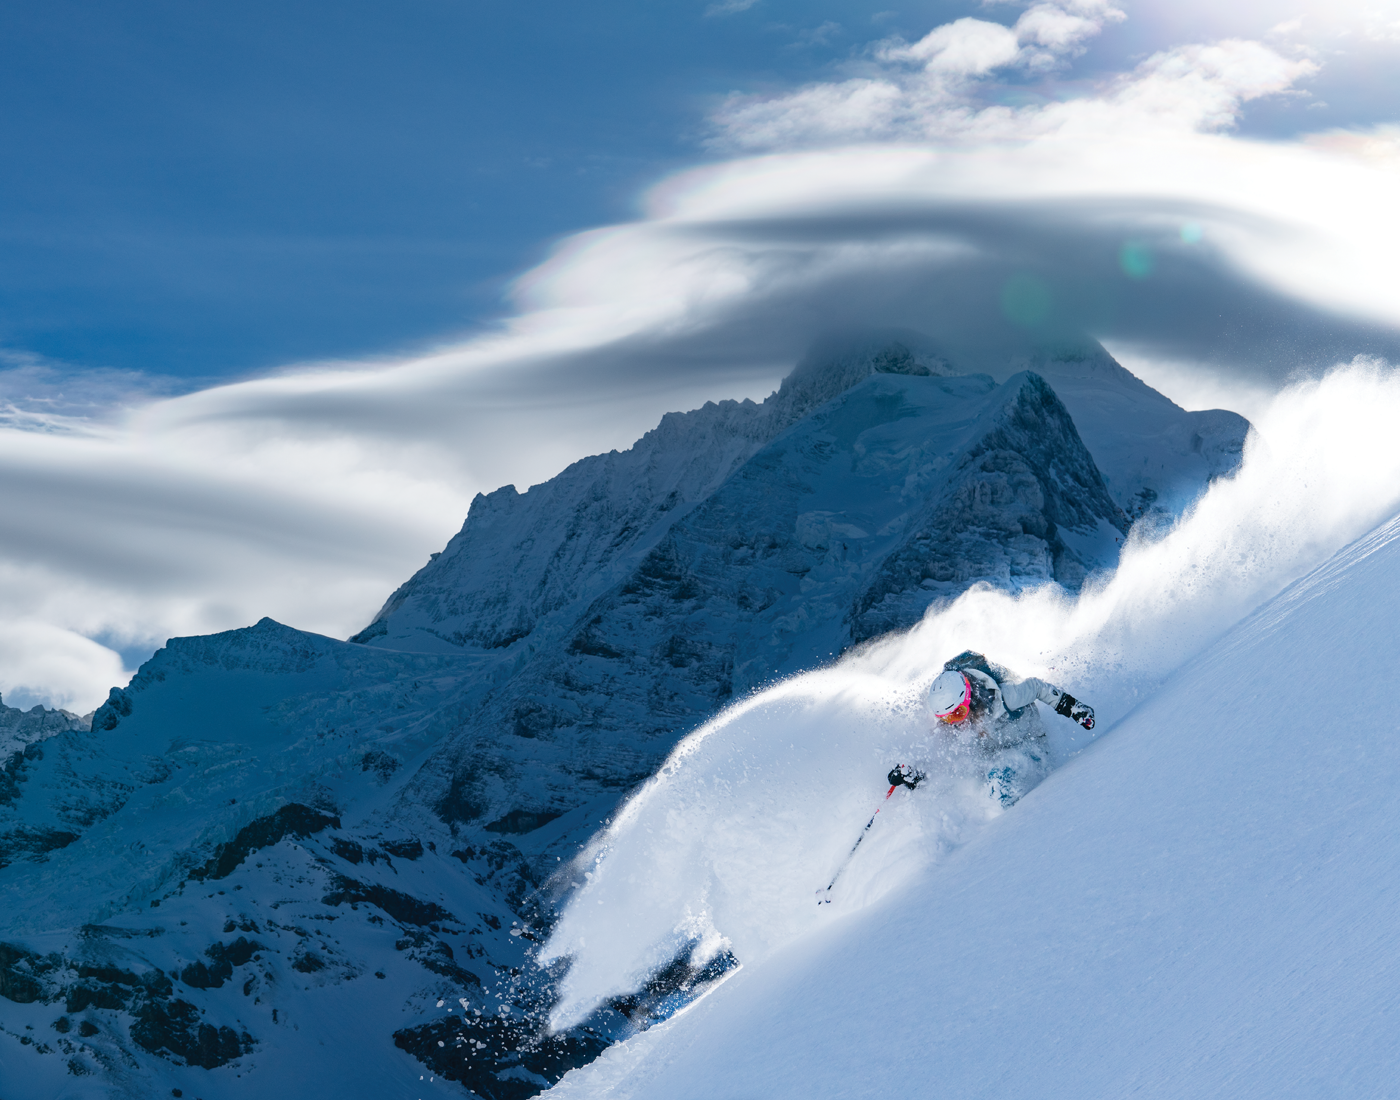 The world's most beautiful ski resort | FREESKIER